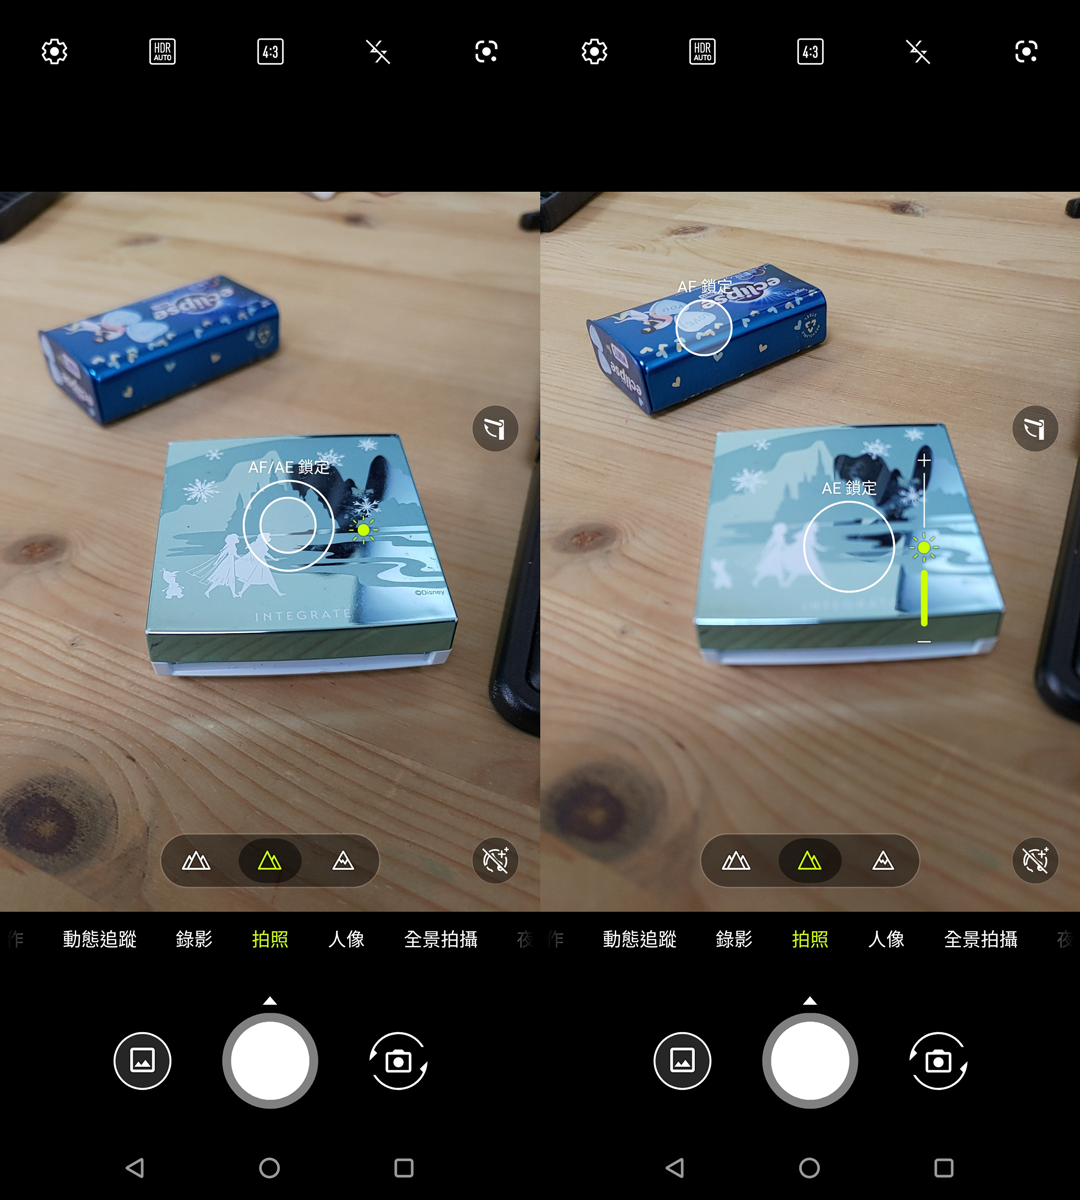 ASUS ZenFone 7 系列功能技巧教學｜翻轉鏡頭角度怎麼拍、ZenUI 7 亮點、智慧快捷鍵設定、Google Camera 安裝、華碩 2020 旗艦手機｜科技狗 - ASUS, ASUS ZenFone 7, ASUS ZenFone 7 Pro, Google Camera, ZenFone, ZenUI 7, 主流硬體, 使用技巧, 快門鍵優化, 自訂風格, 鏡頭翻轉角度 - 科技狗 3C DOG